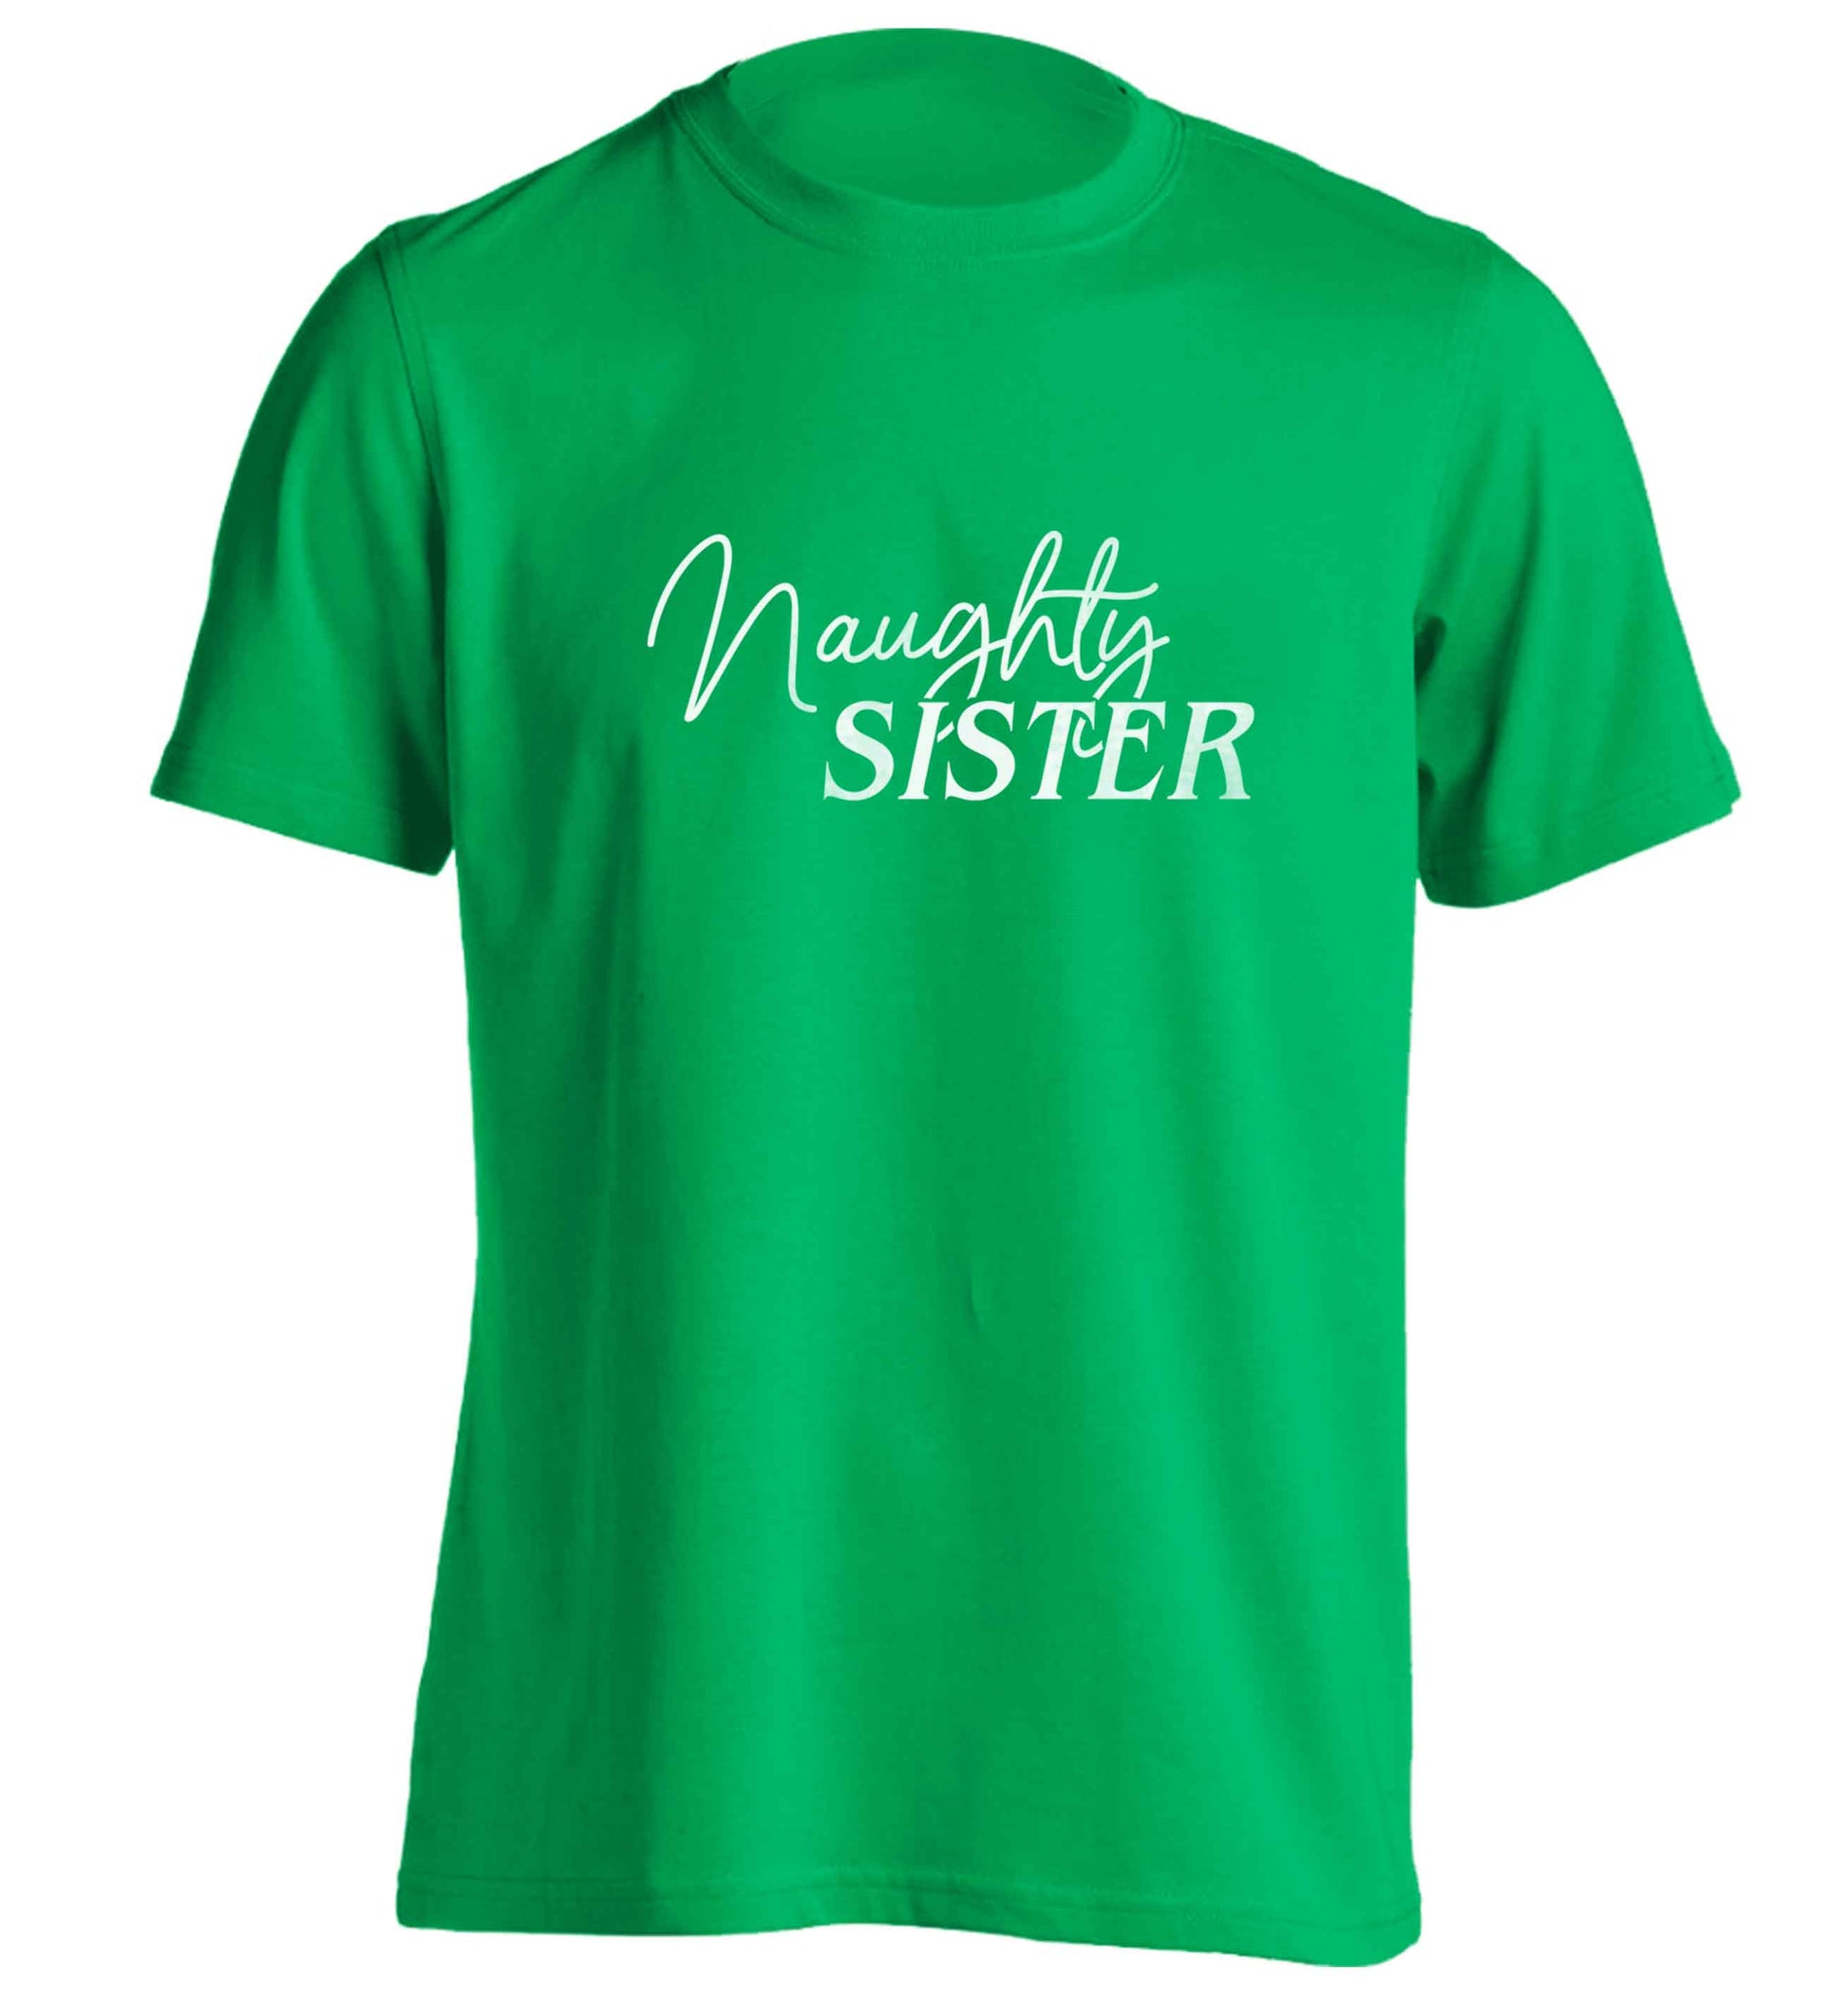 Naughty Sister adults unisex green Tshirt 2XL